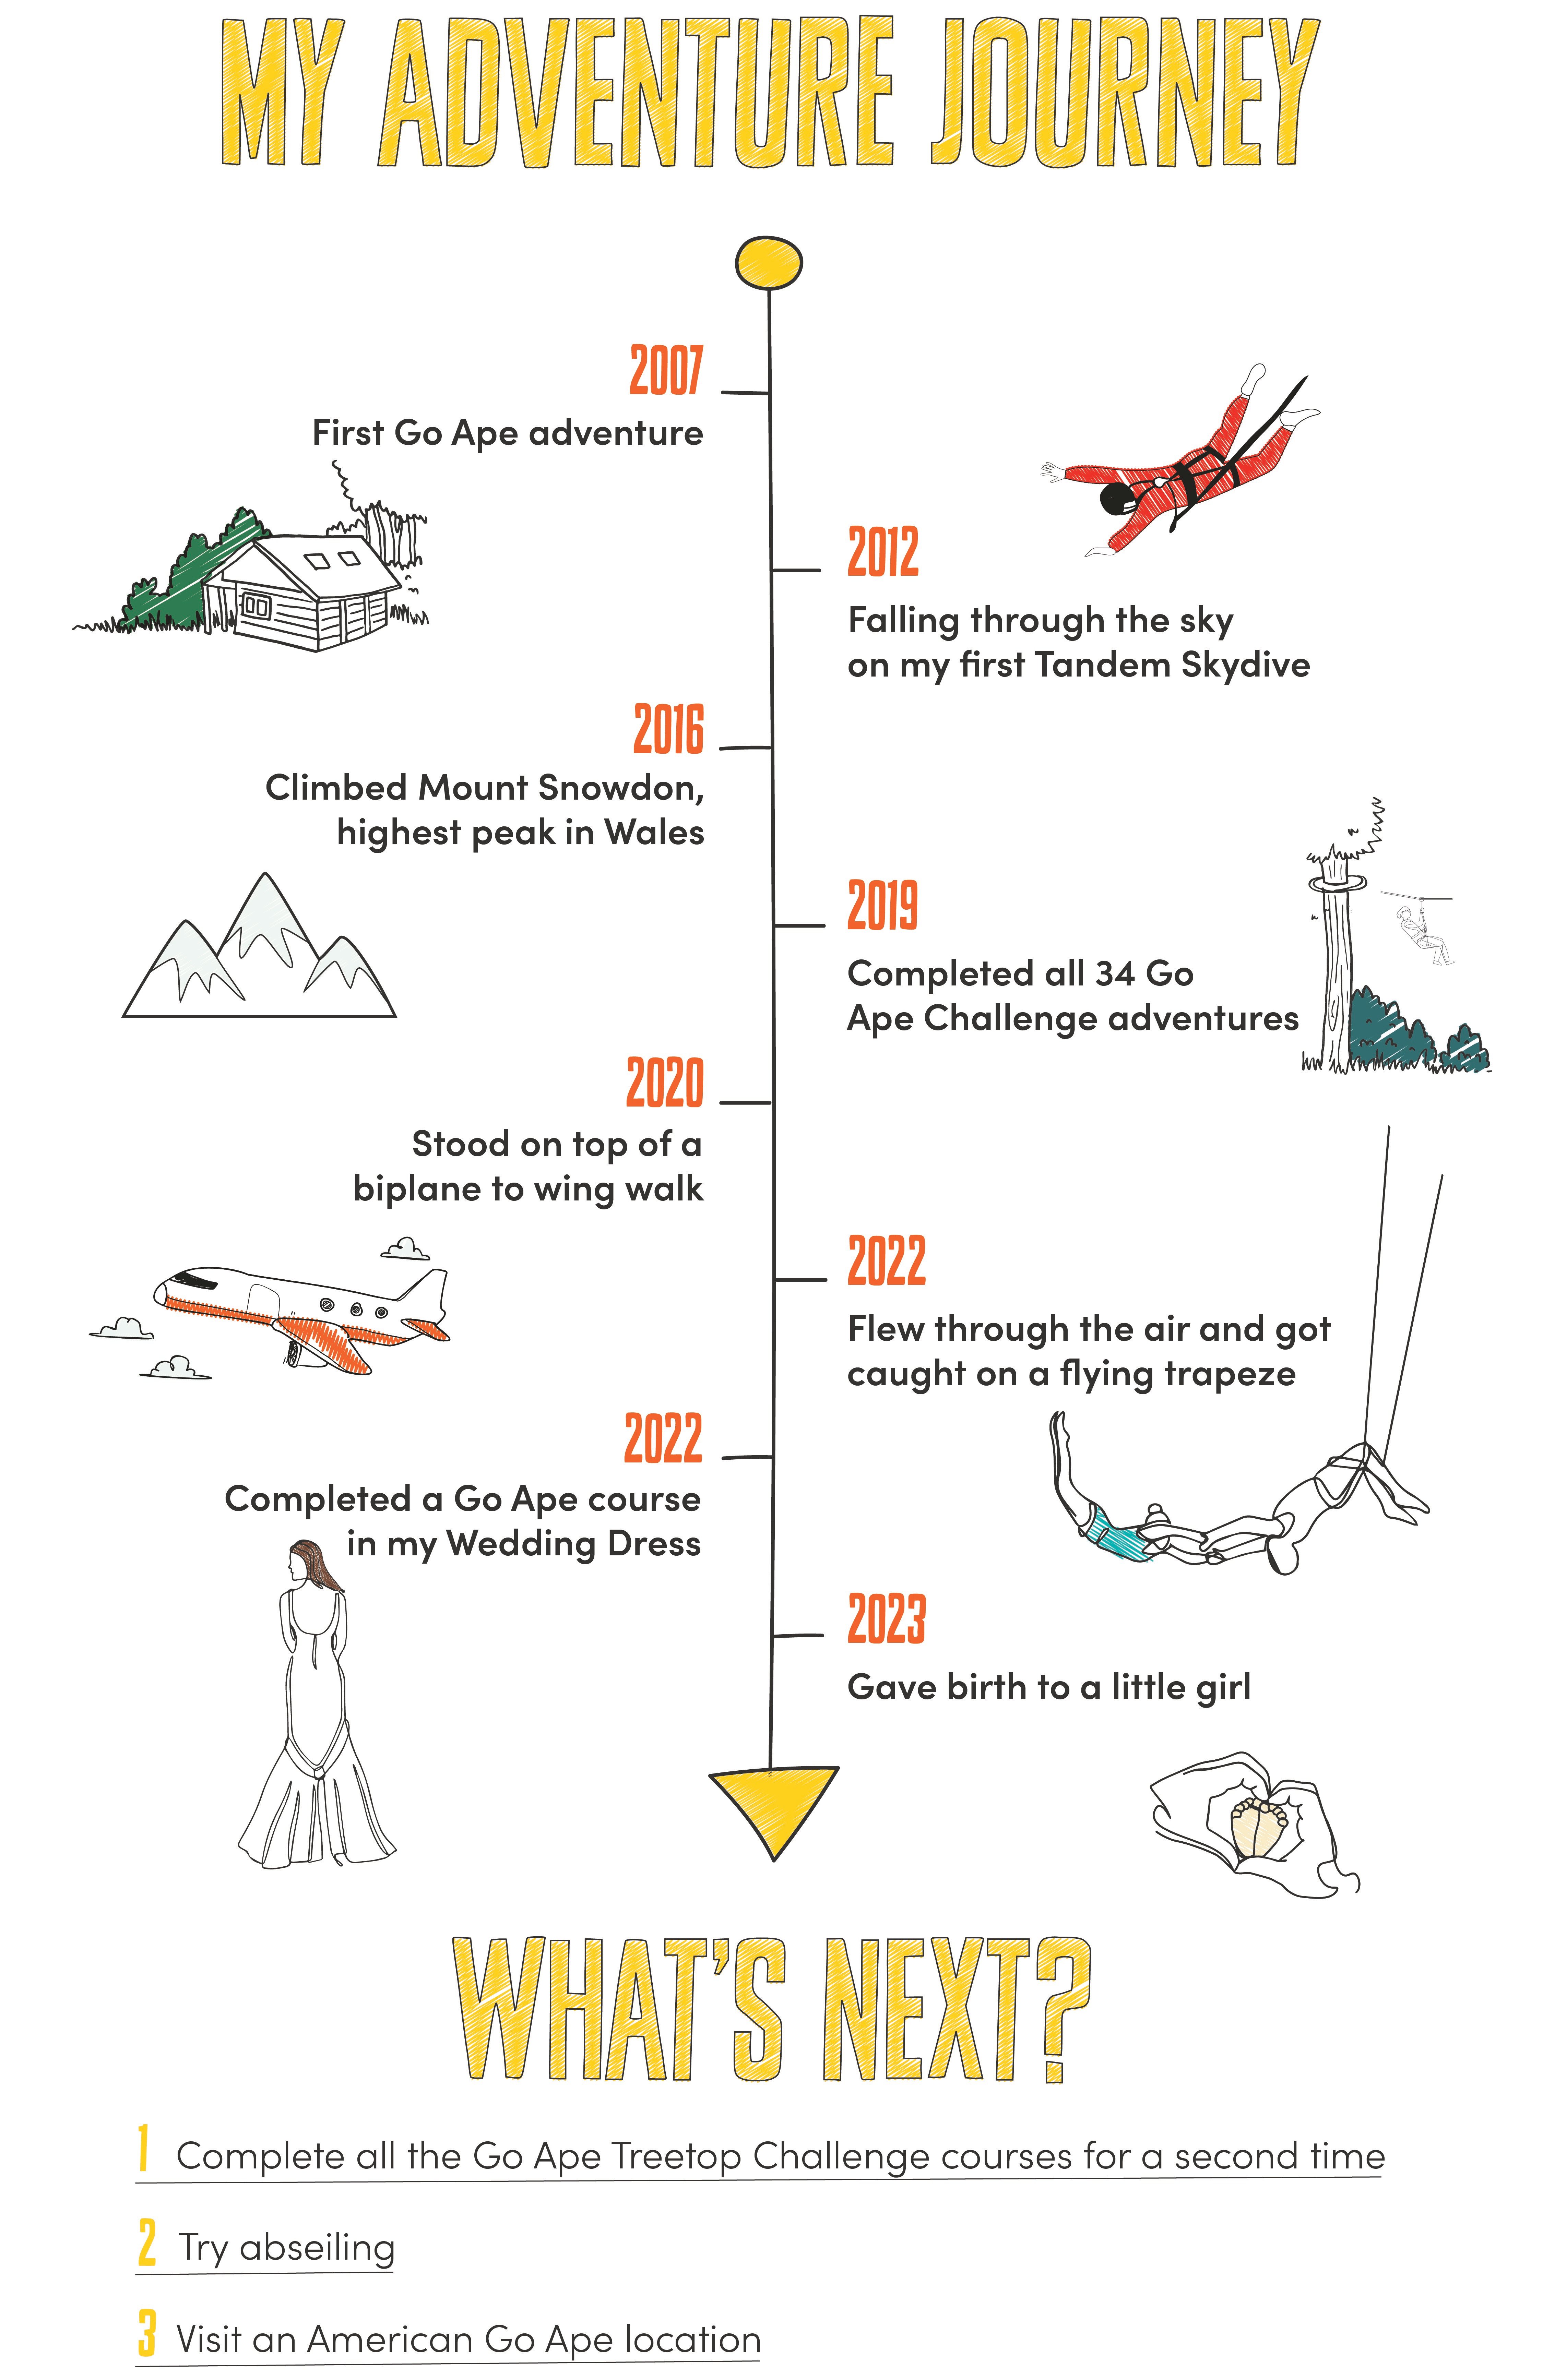 a timeline of adventures undertaken by Go Ape tribe member Verity Bailes